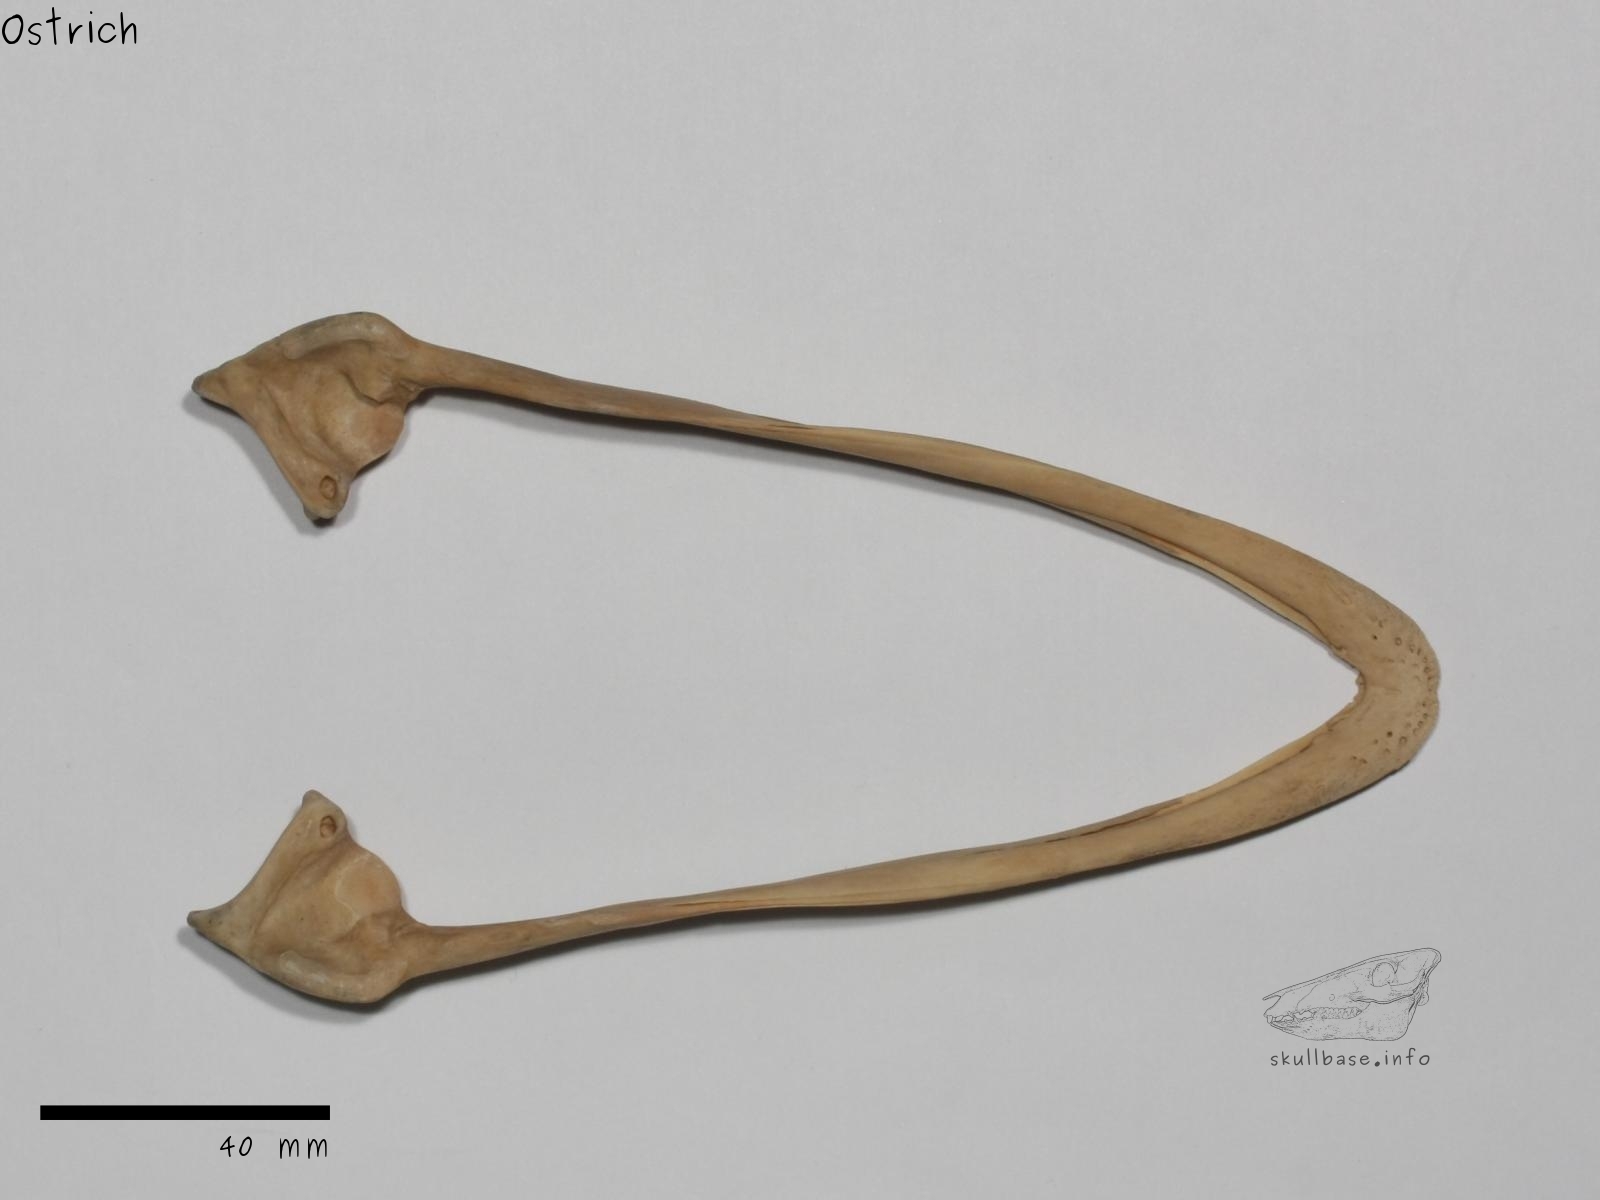 Ostrich (Struthio camelus) jaw